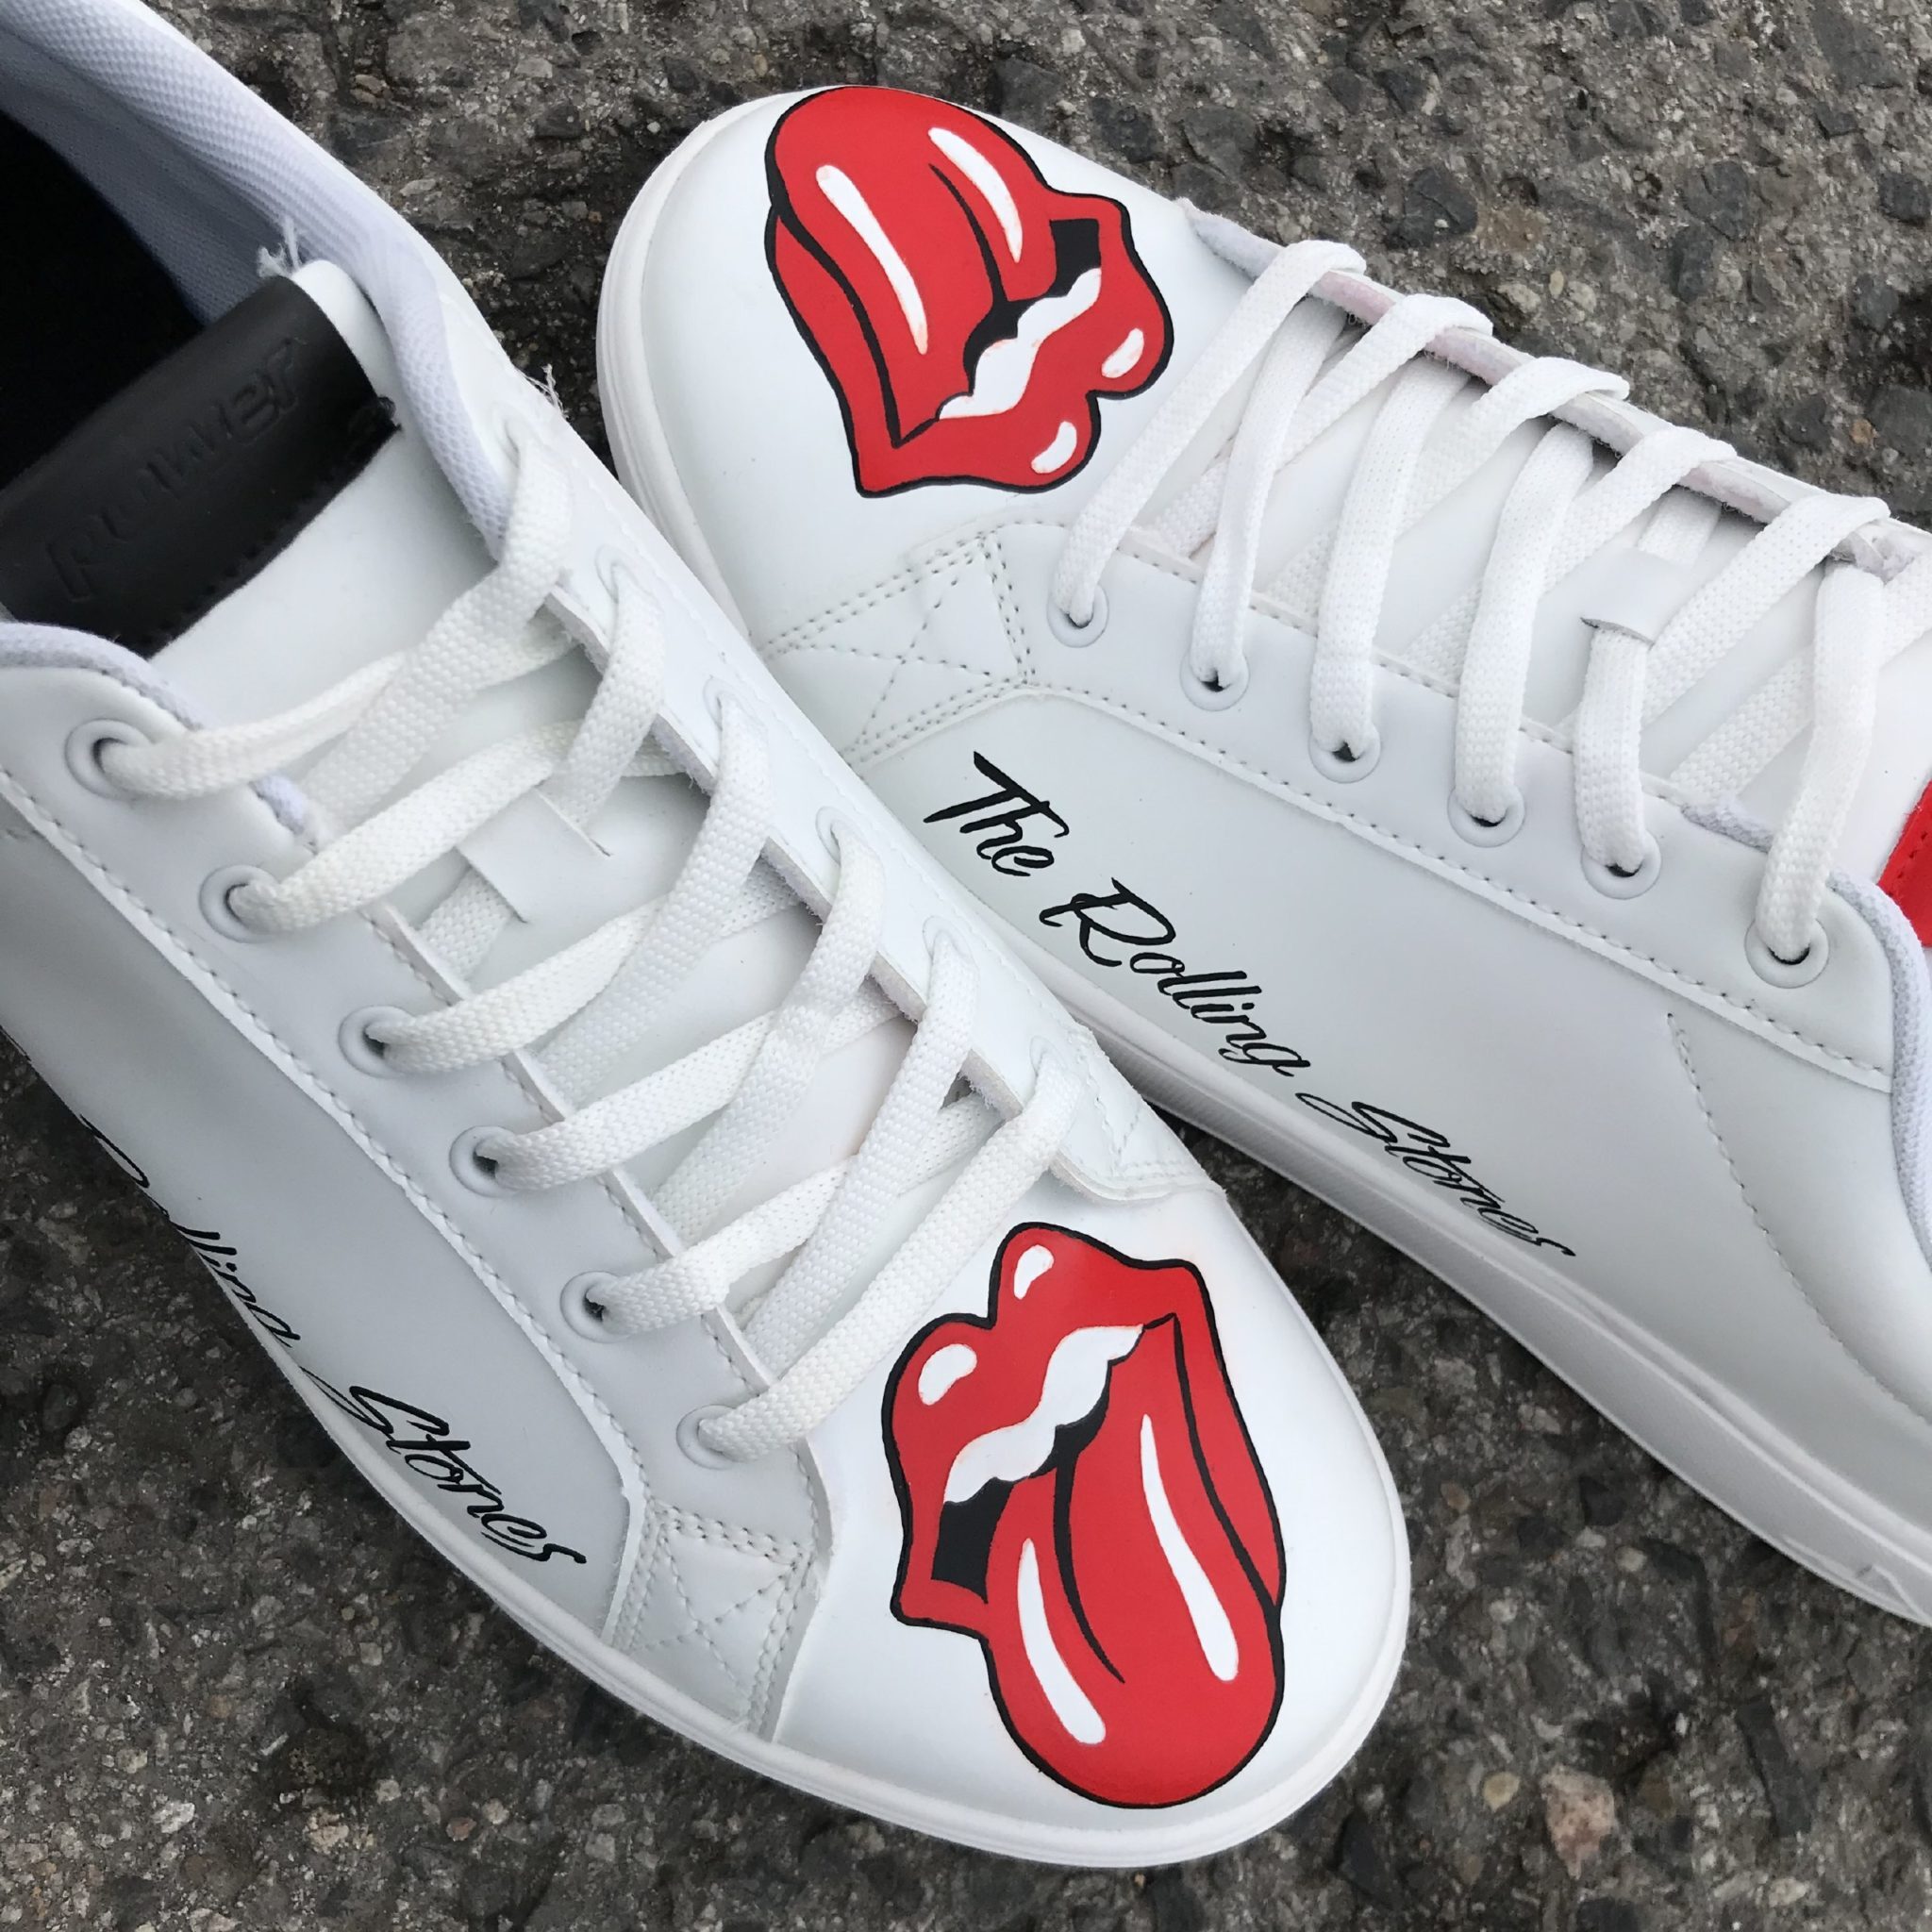 Rolling Stones custom shoes